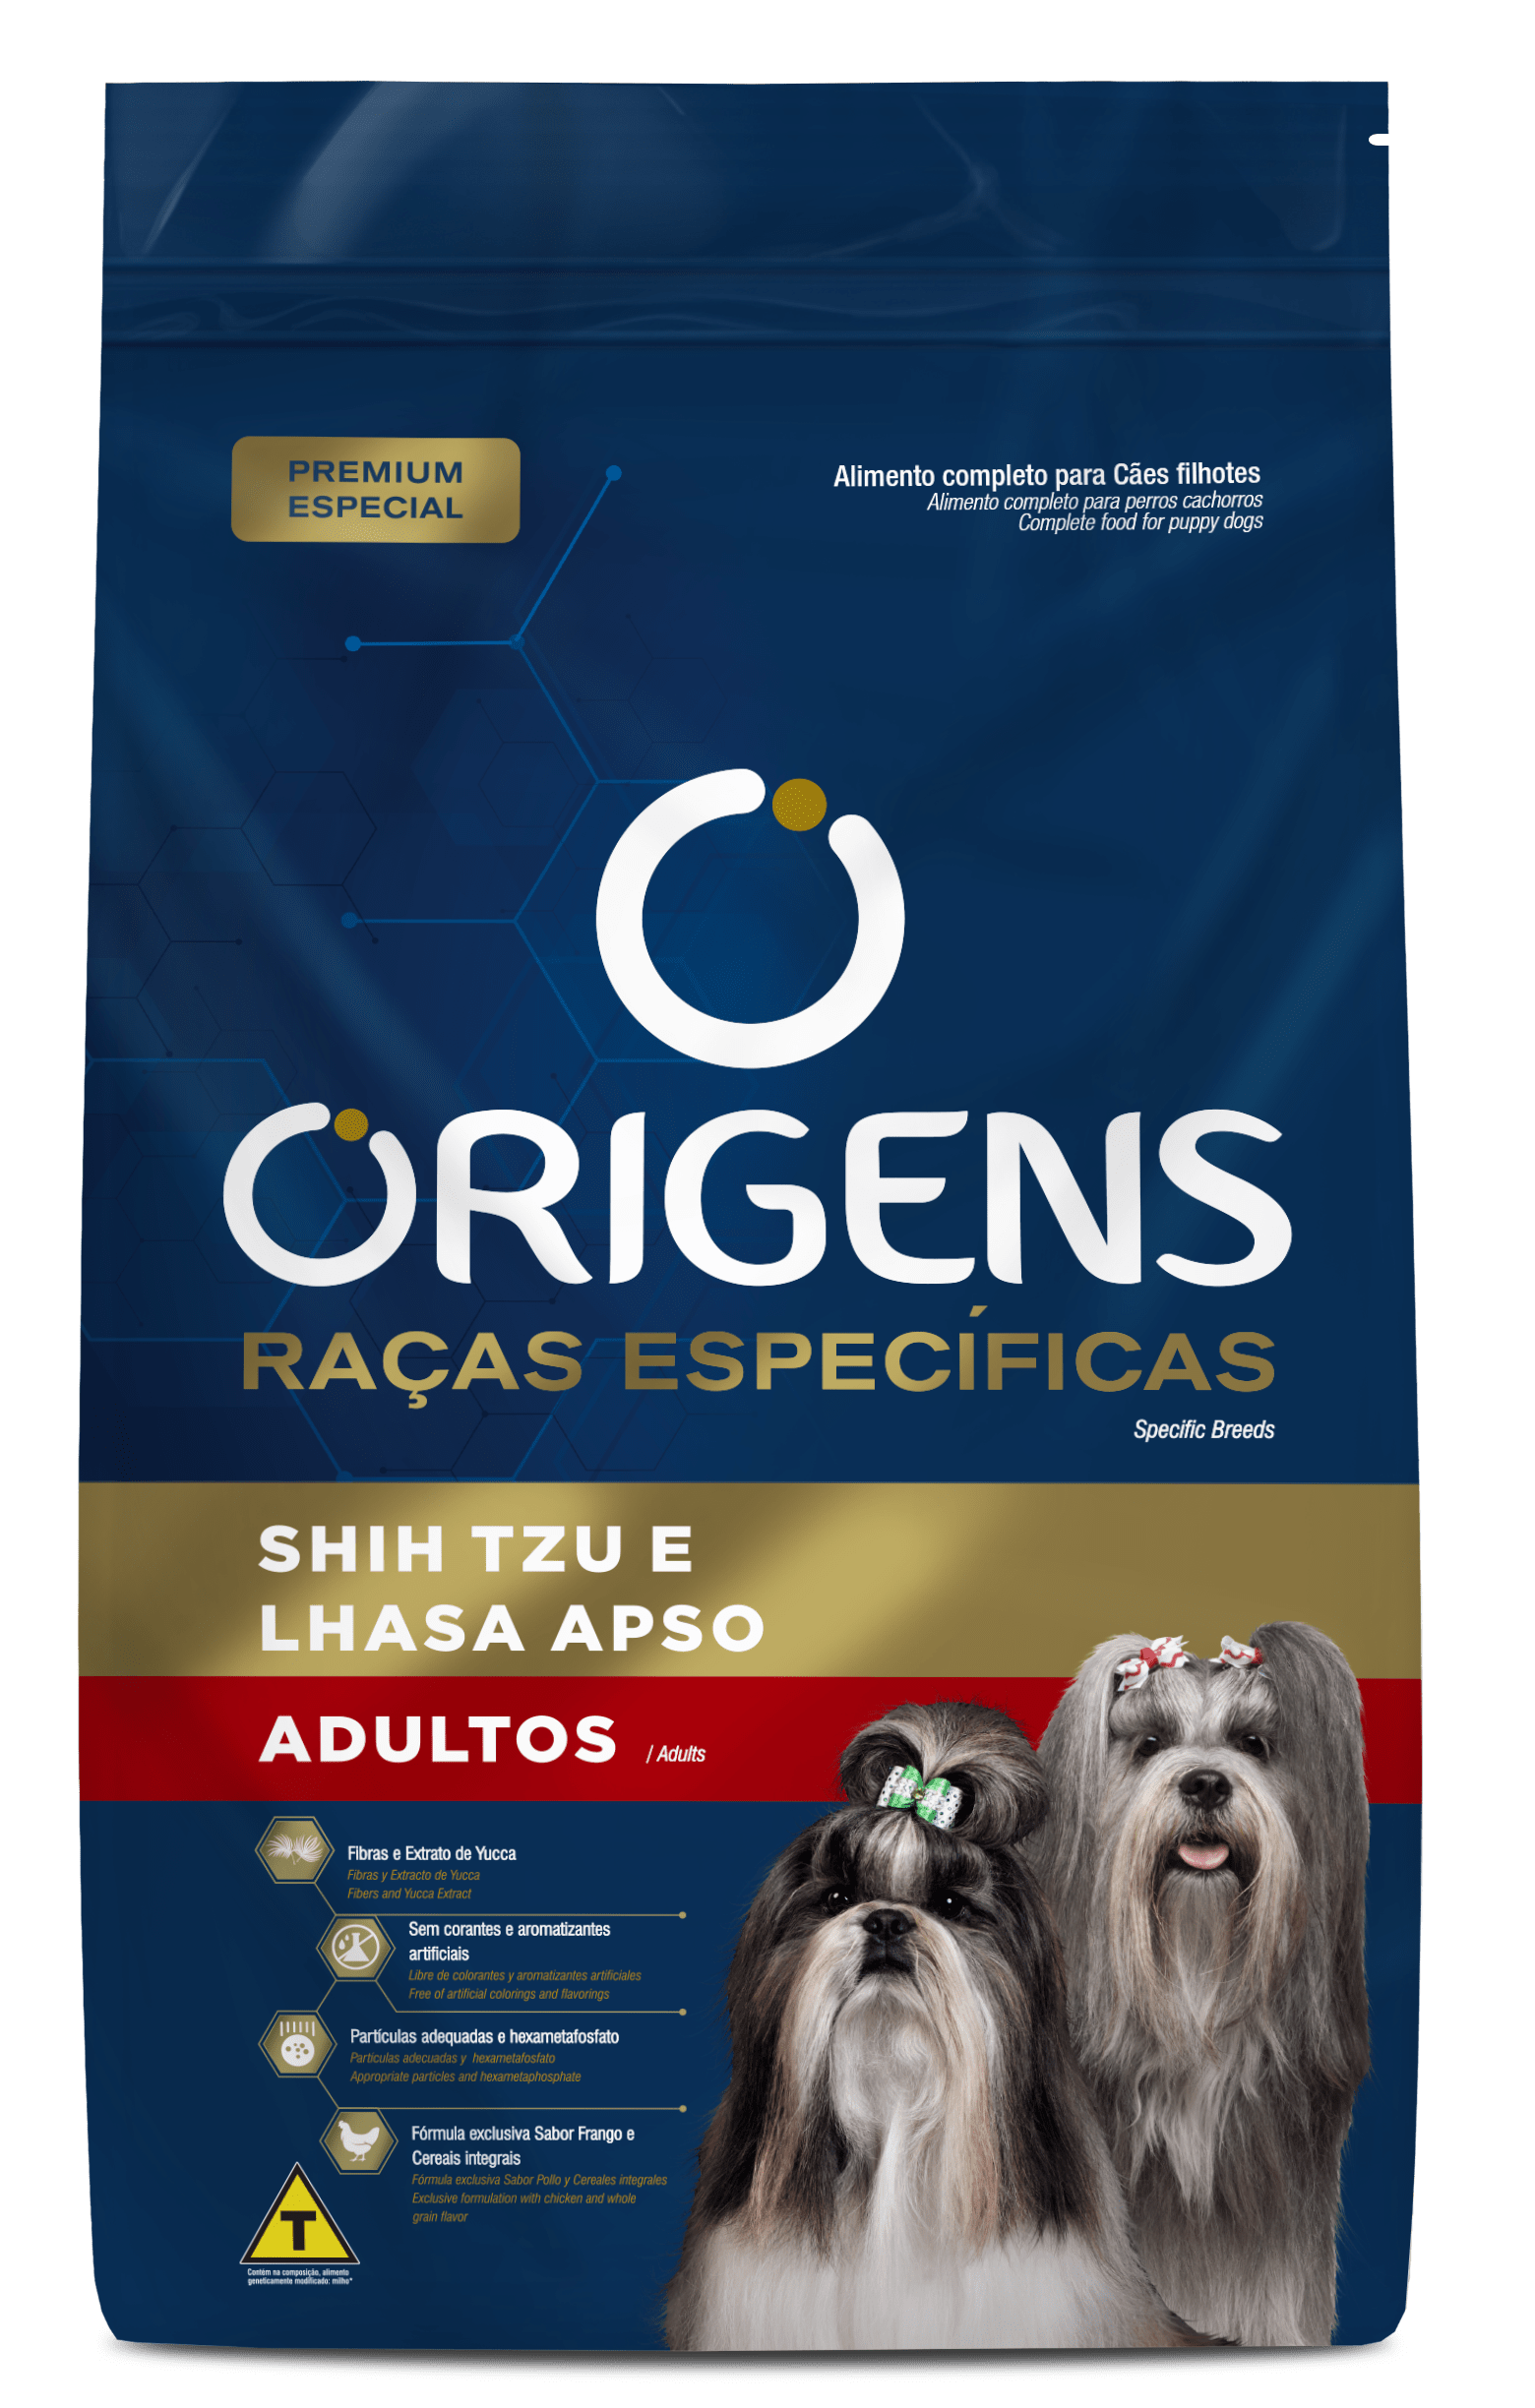 Origens Premium Especial Specific Breeds Adult Dogs Shih Tzu and Lhasa Apso